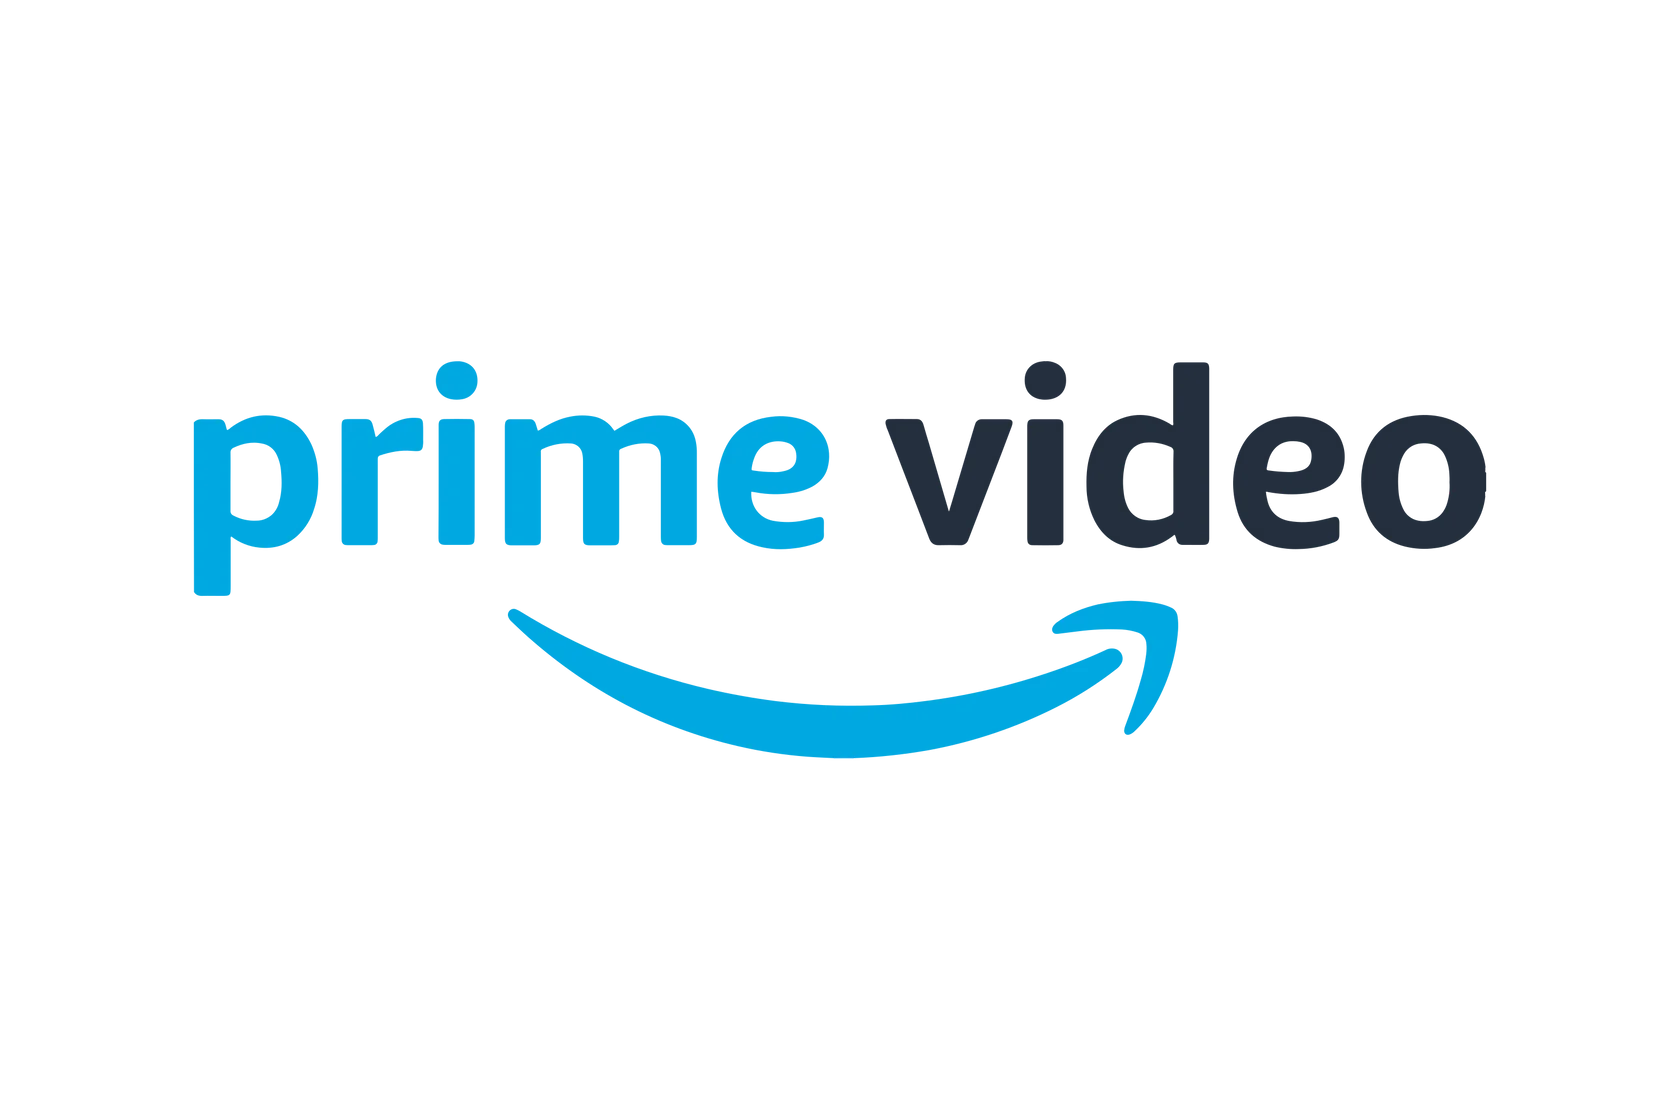 Amazon Prime Video logo 